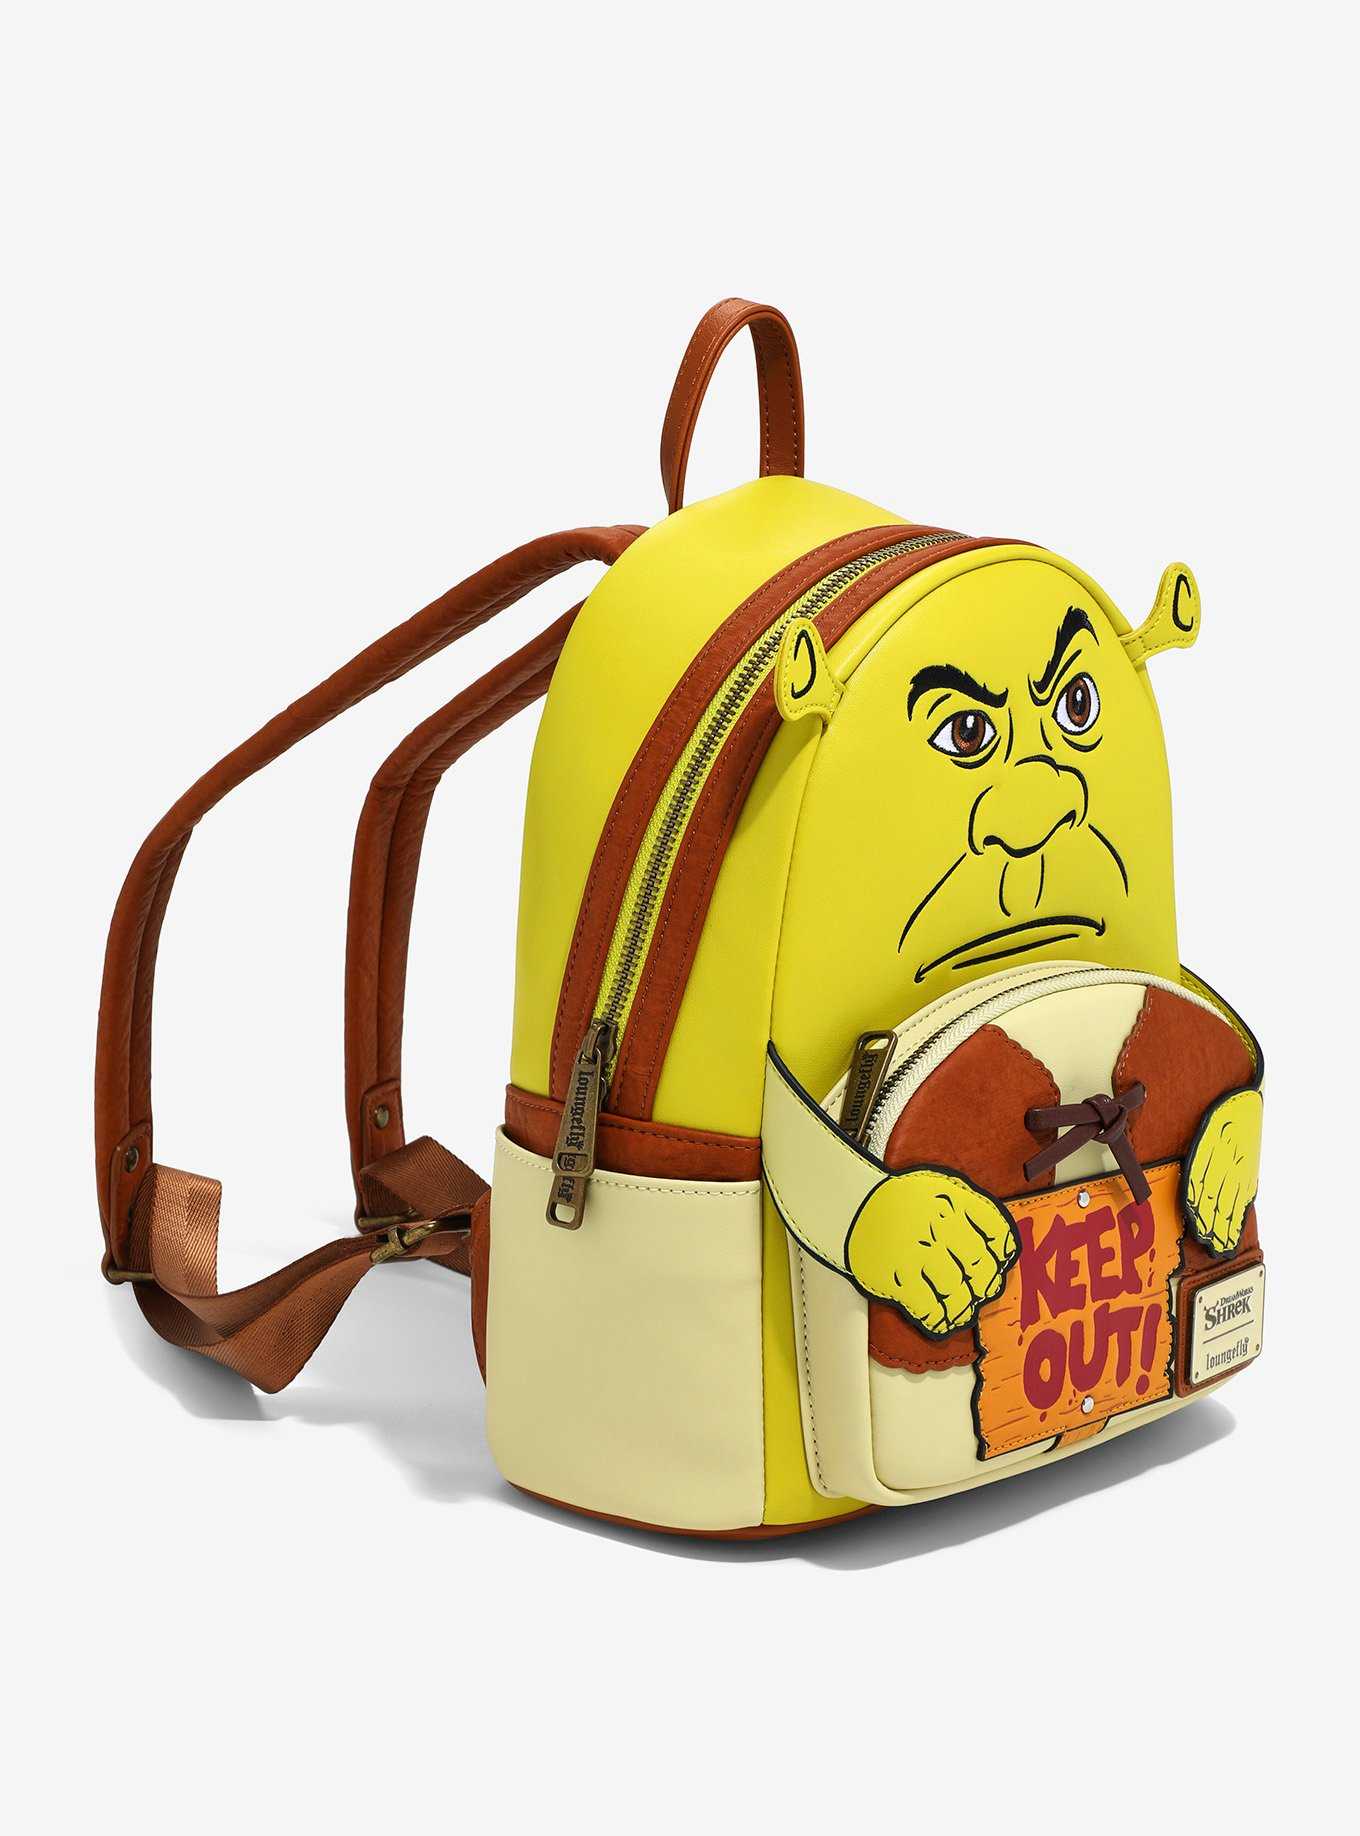 Loungefly Shrek Keep Out Mini Backpack, , hi-res